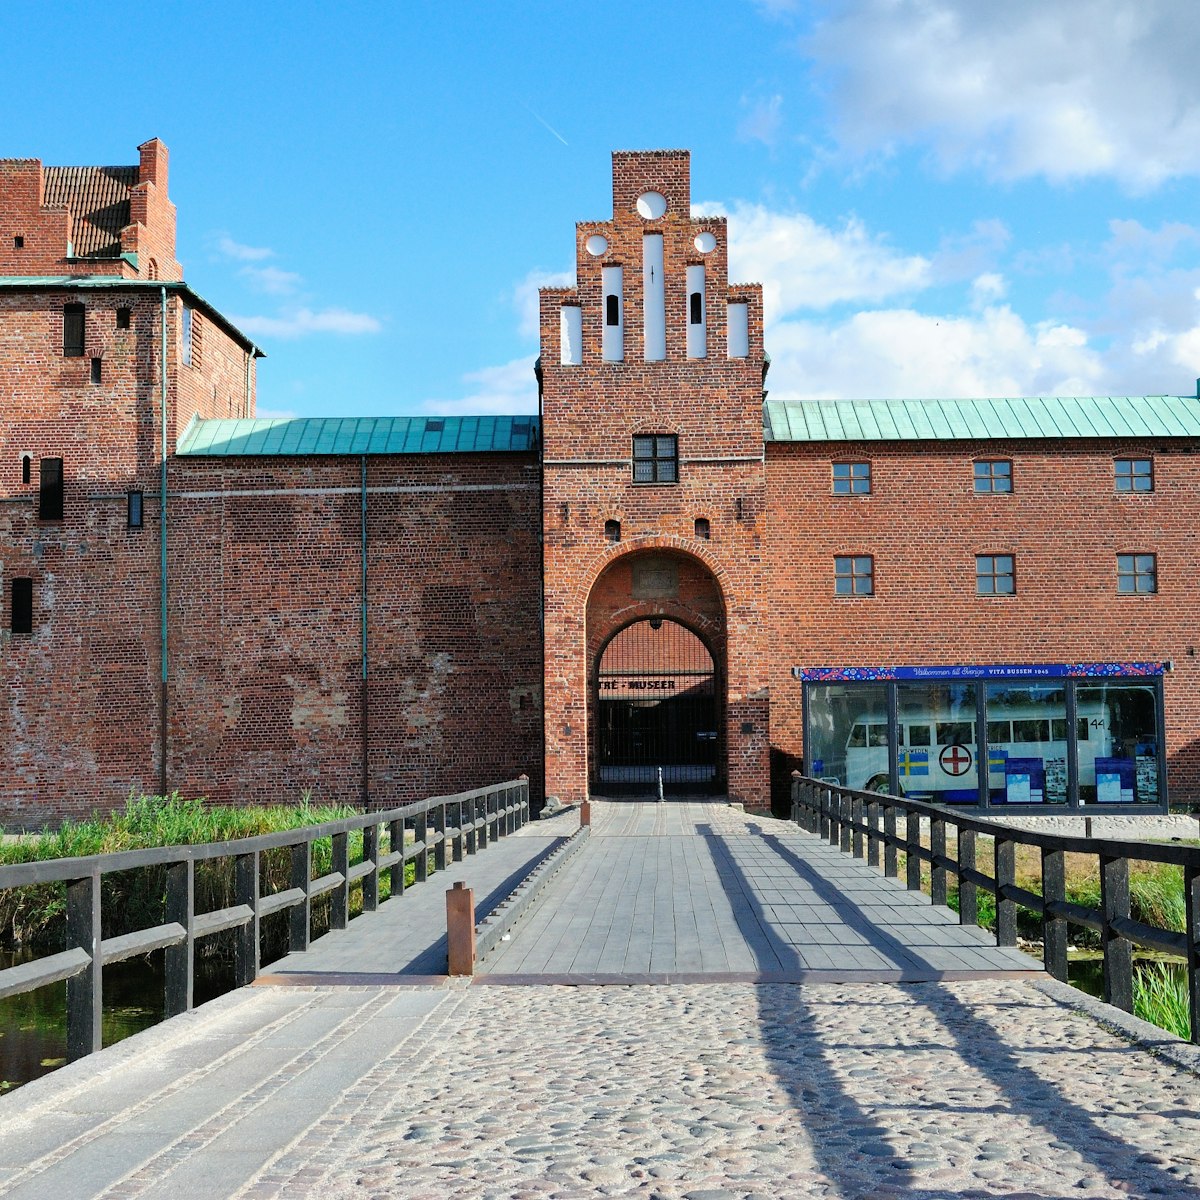 16th century Malmöhus (Castle) now housing Malmö Museer museum.